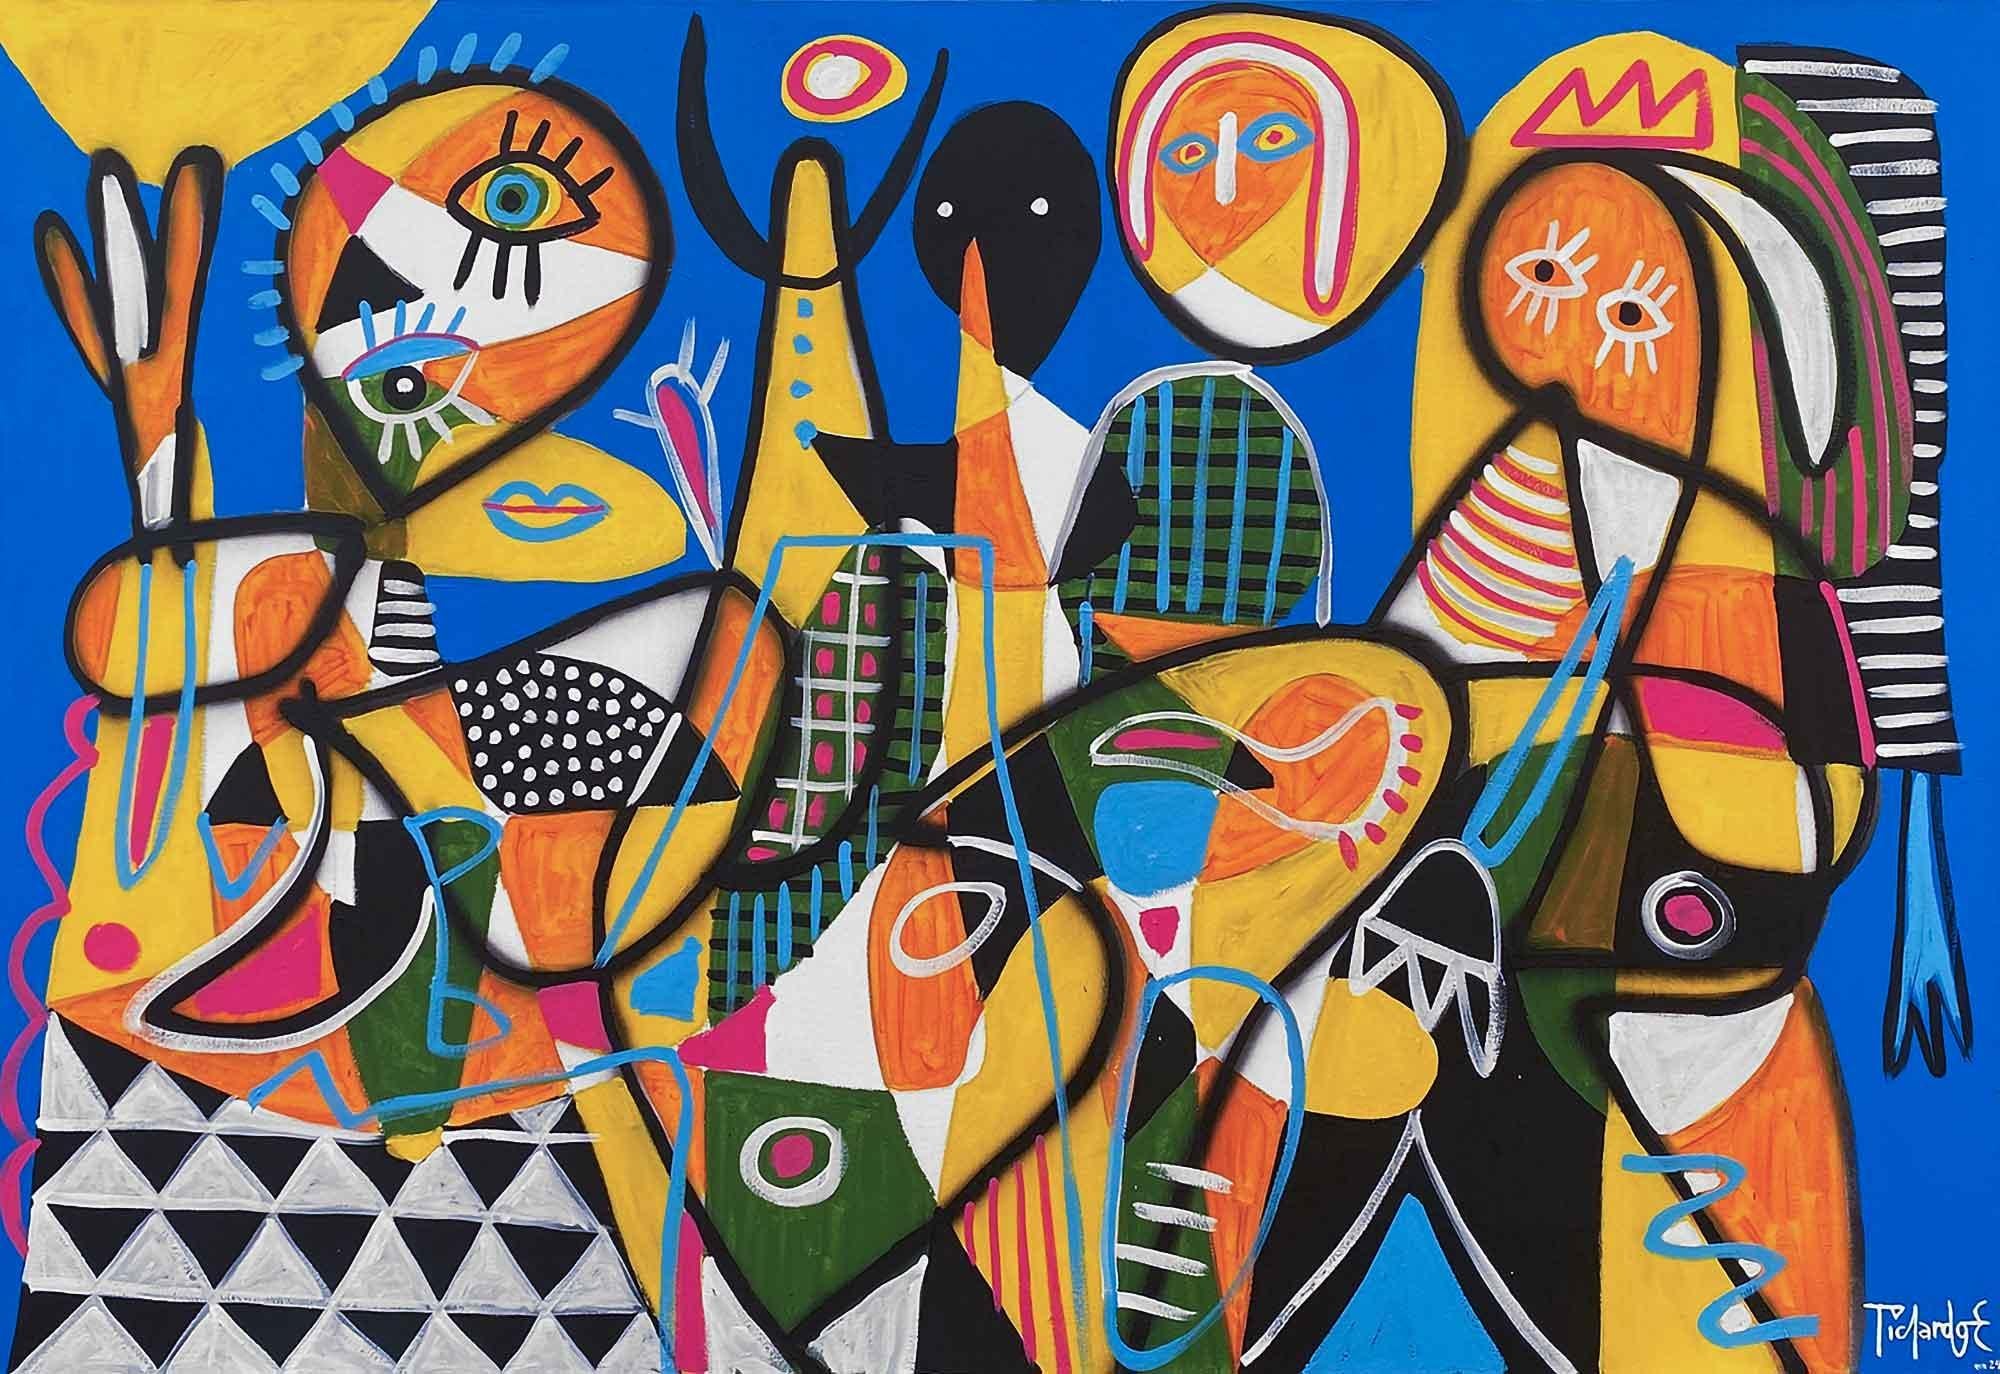 Contemporary Art, Abstract Painting
Acrylic on canvas
130x190cm
Signed 




About the artist
Enrique Pichardo (Mexico City, 1973) graduated from Escuela Nacional de Pintura, Escultura y Grabado (ENPEG) “La Esmeralda”. As a Mexican Contemporary